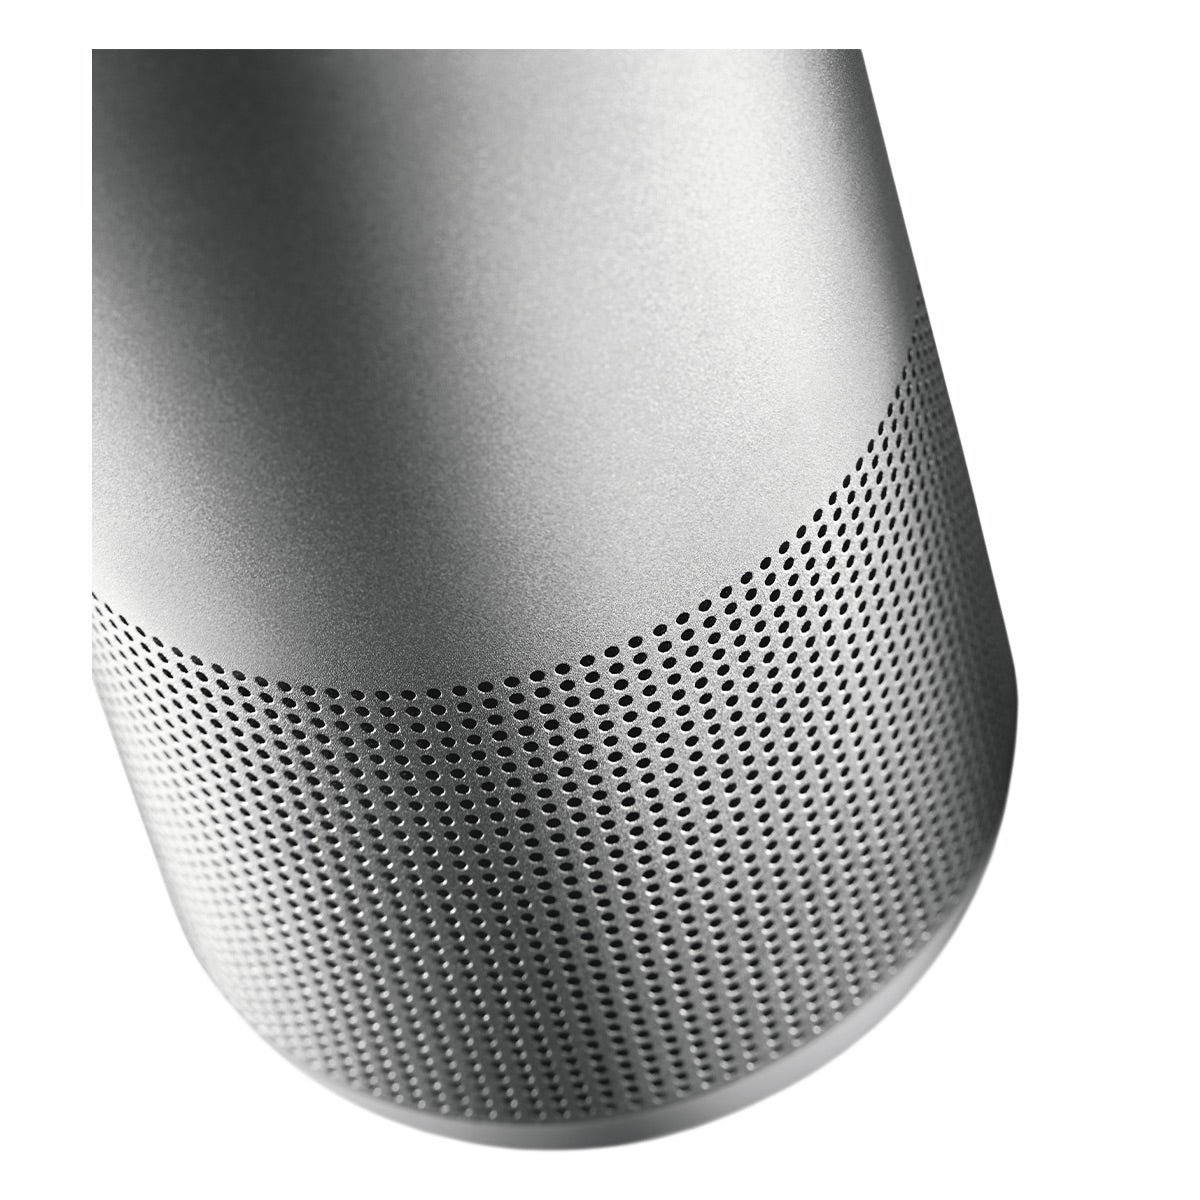 Bose SoundLink Revolve+ II Bluetooth Speaker (Silver)